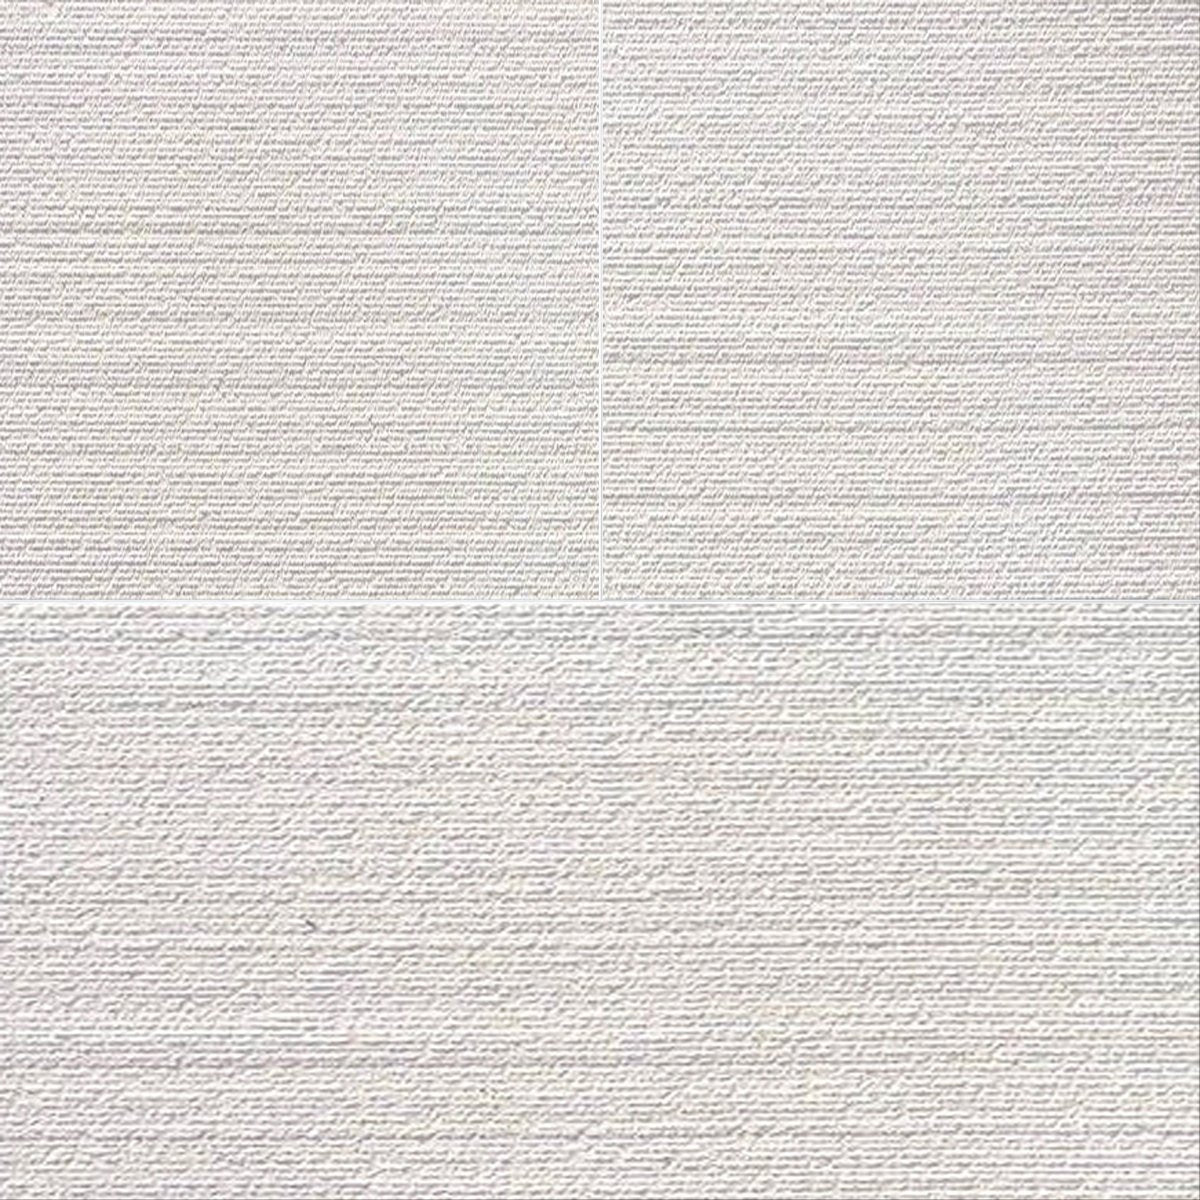 Palazzo Sand Racked Textured Limestone Field Tile 16''x24''x5/8''